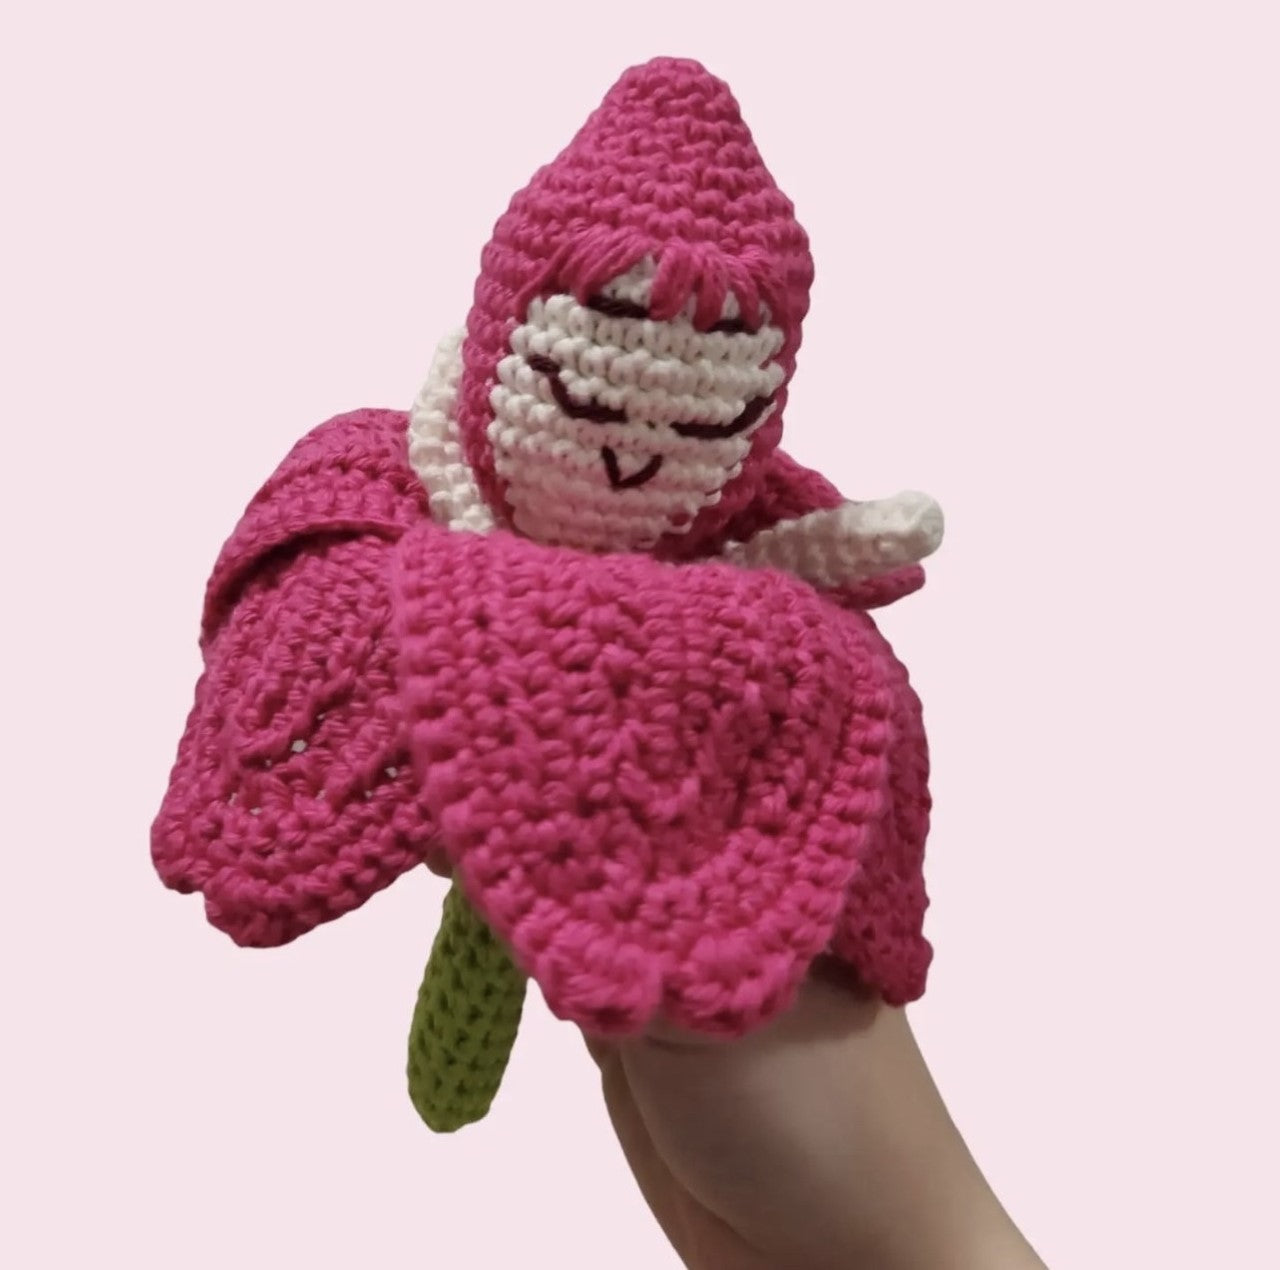 Tulip Crochet Dolls